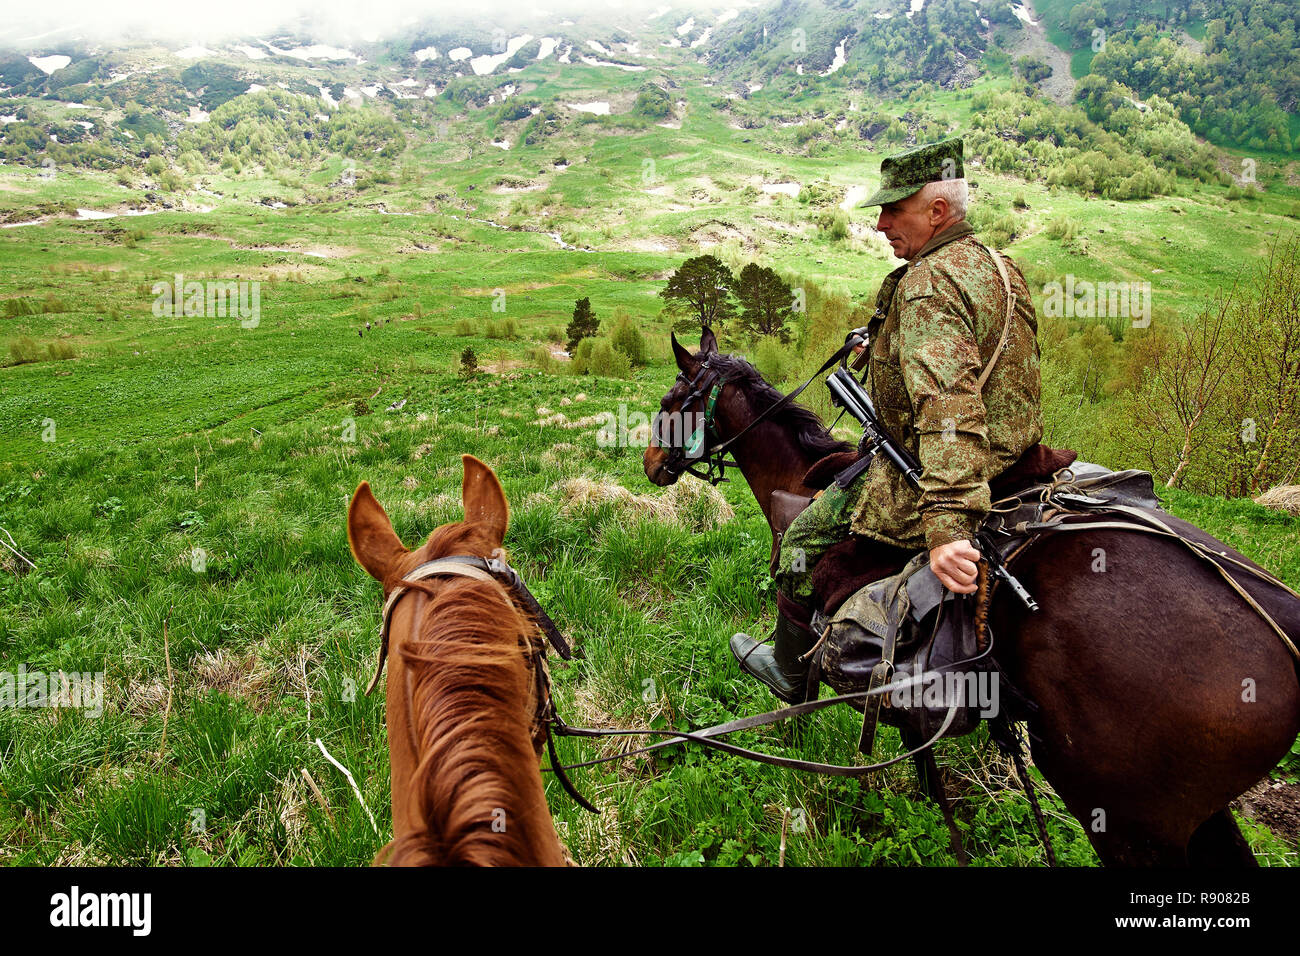 Krasnodar, RUSSIA - July 17, 2015: Huntsman is a horse in the mountains. Stock Photo